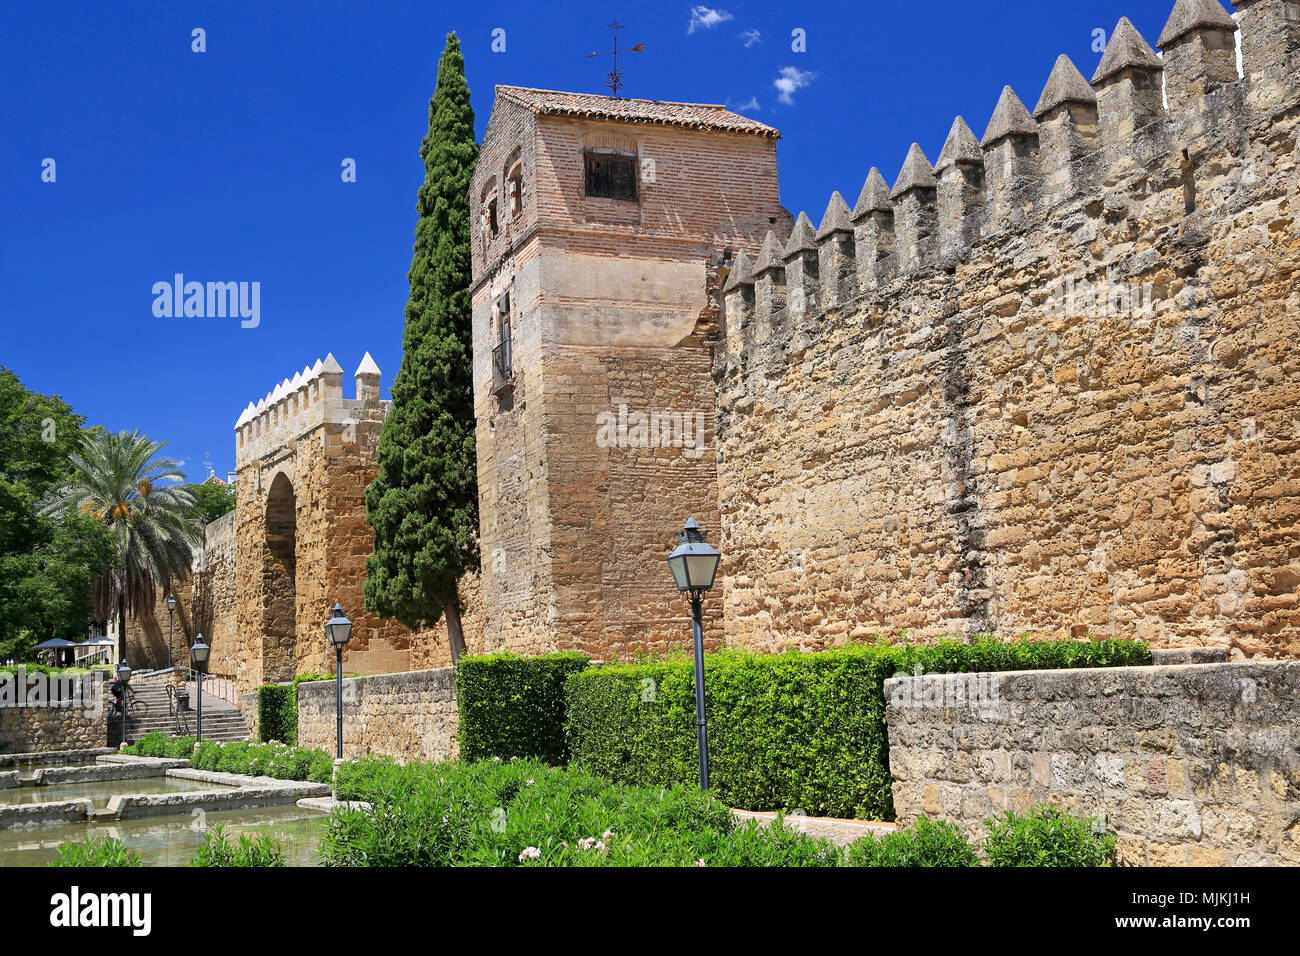 Exterior walls of city of Cordoba, Spain Stock Photo